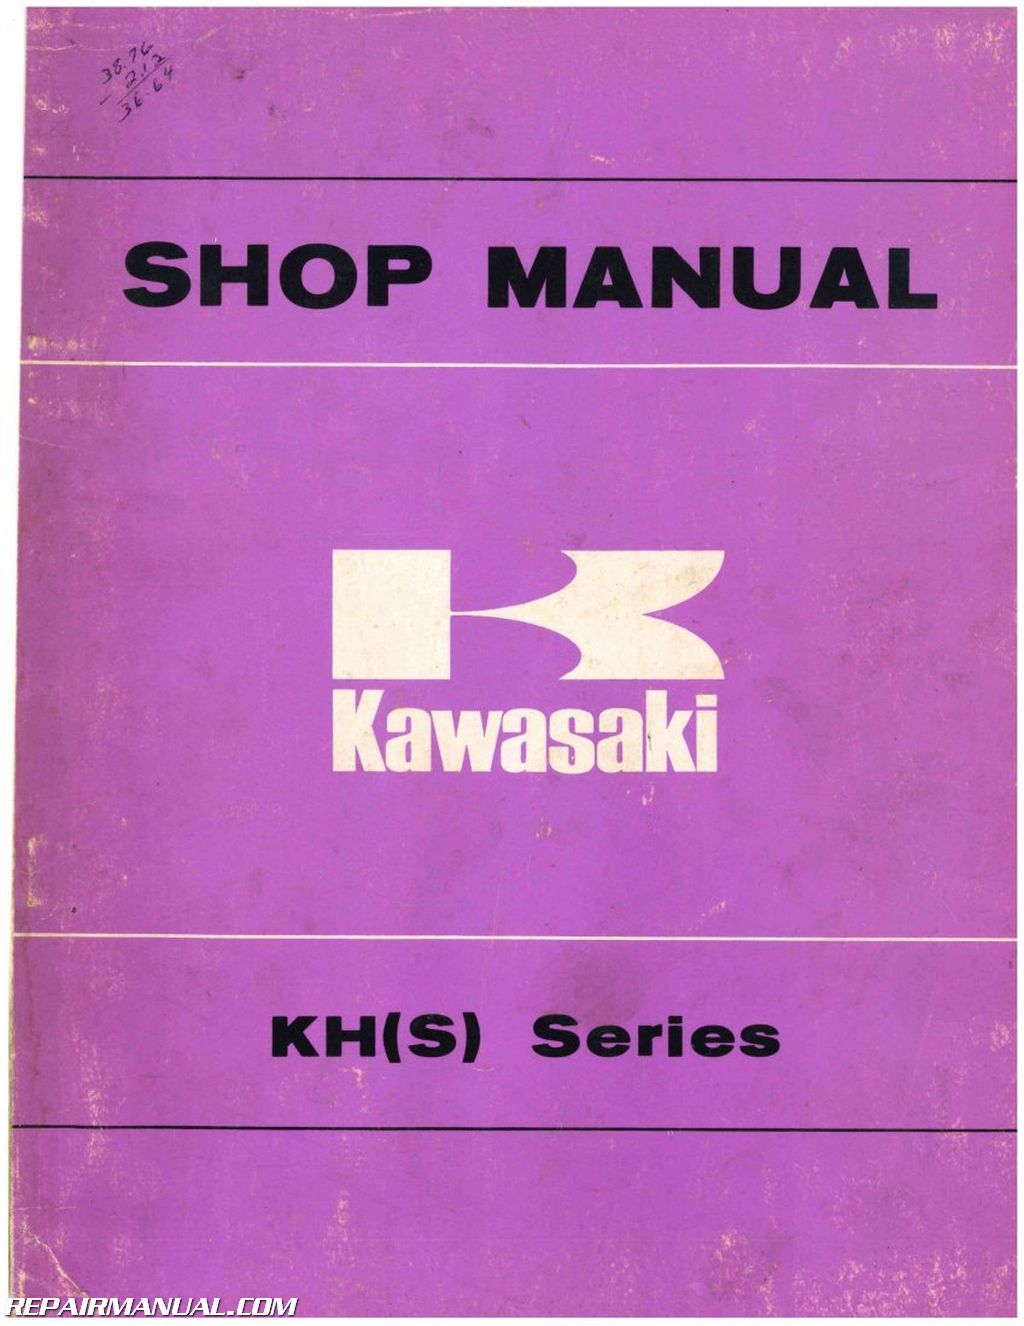 Haynes 134 1972-1979 Kawasaki 250 300 400 Triples Maintenance Service Manual